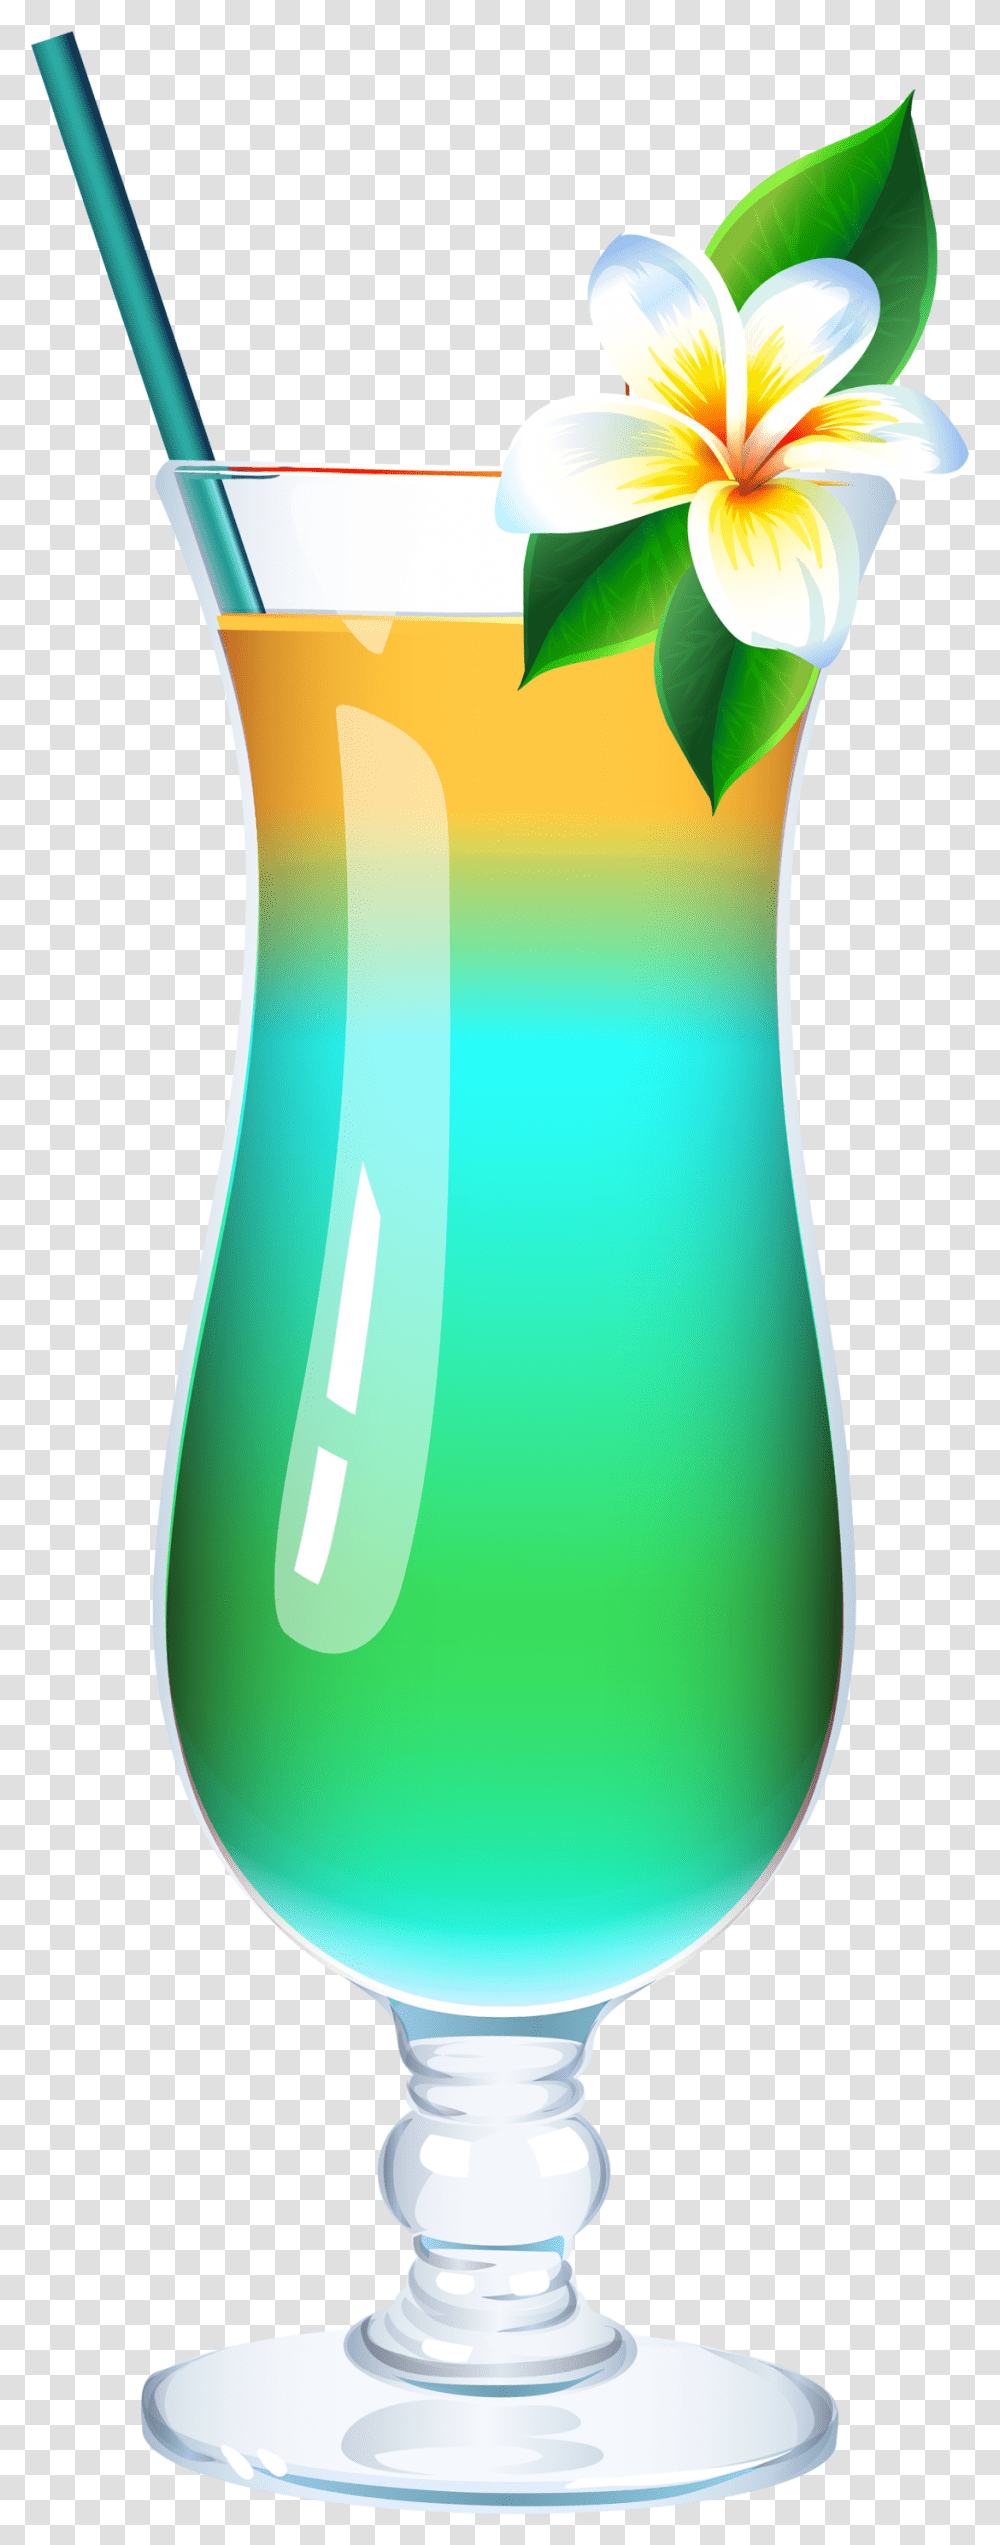 Cocktail Image For Free Download Cocktail Clipart, Lamp, Bottle, Water Bottle, Jar Transparent Png